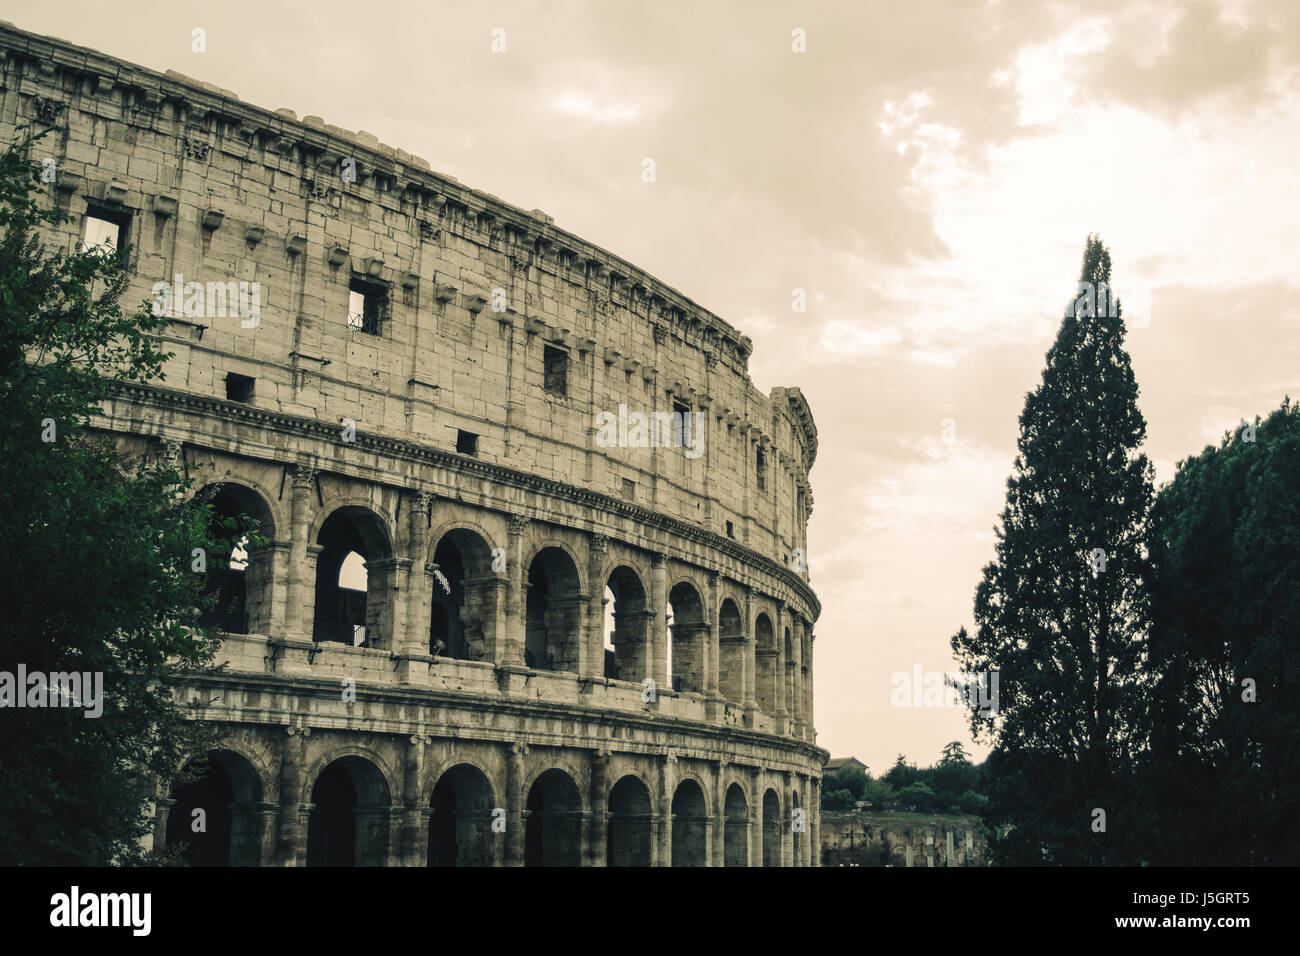 The coliseum amphitheatre in Rome, Italy. Stock Photo